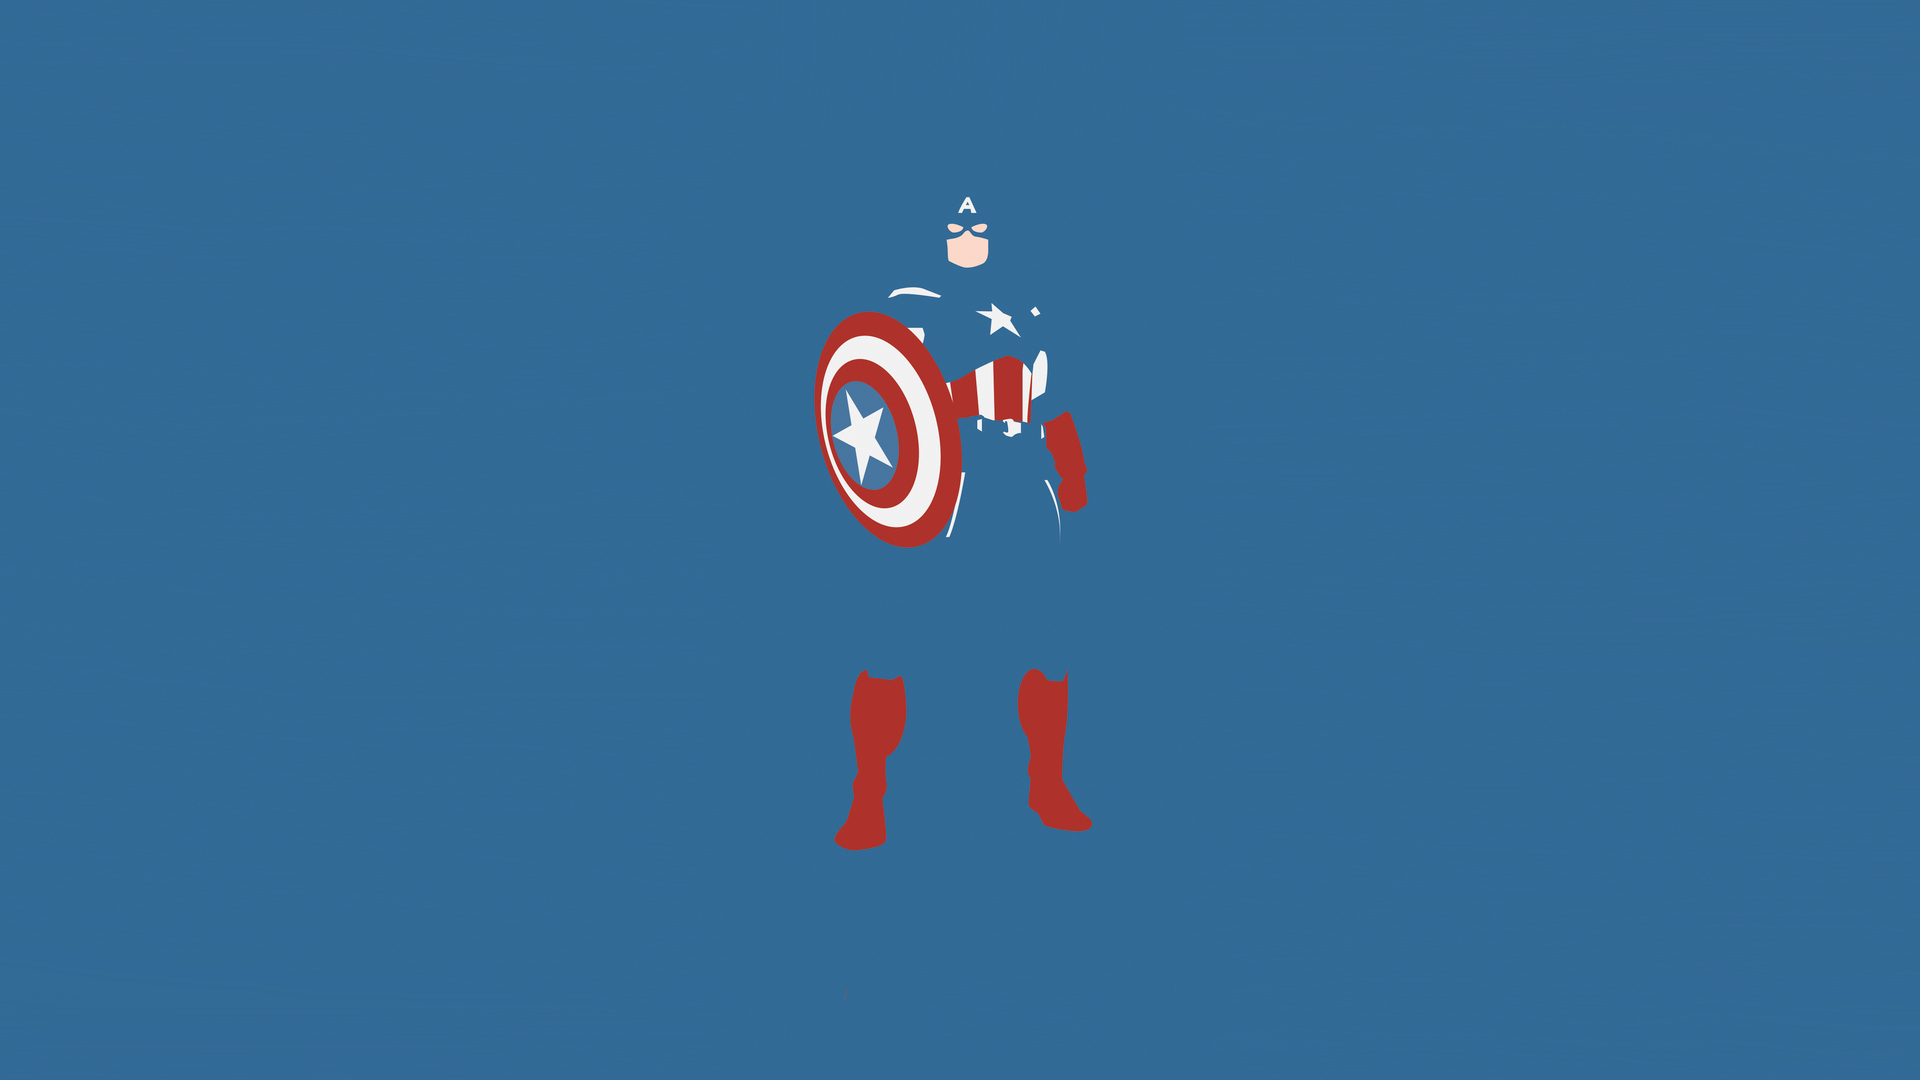 Captain America Marvel Comics Minimalism Wallpapers